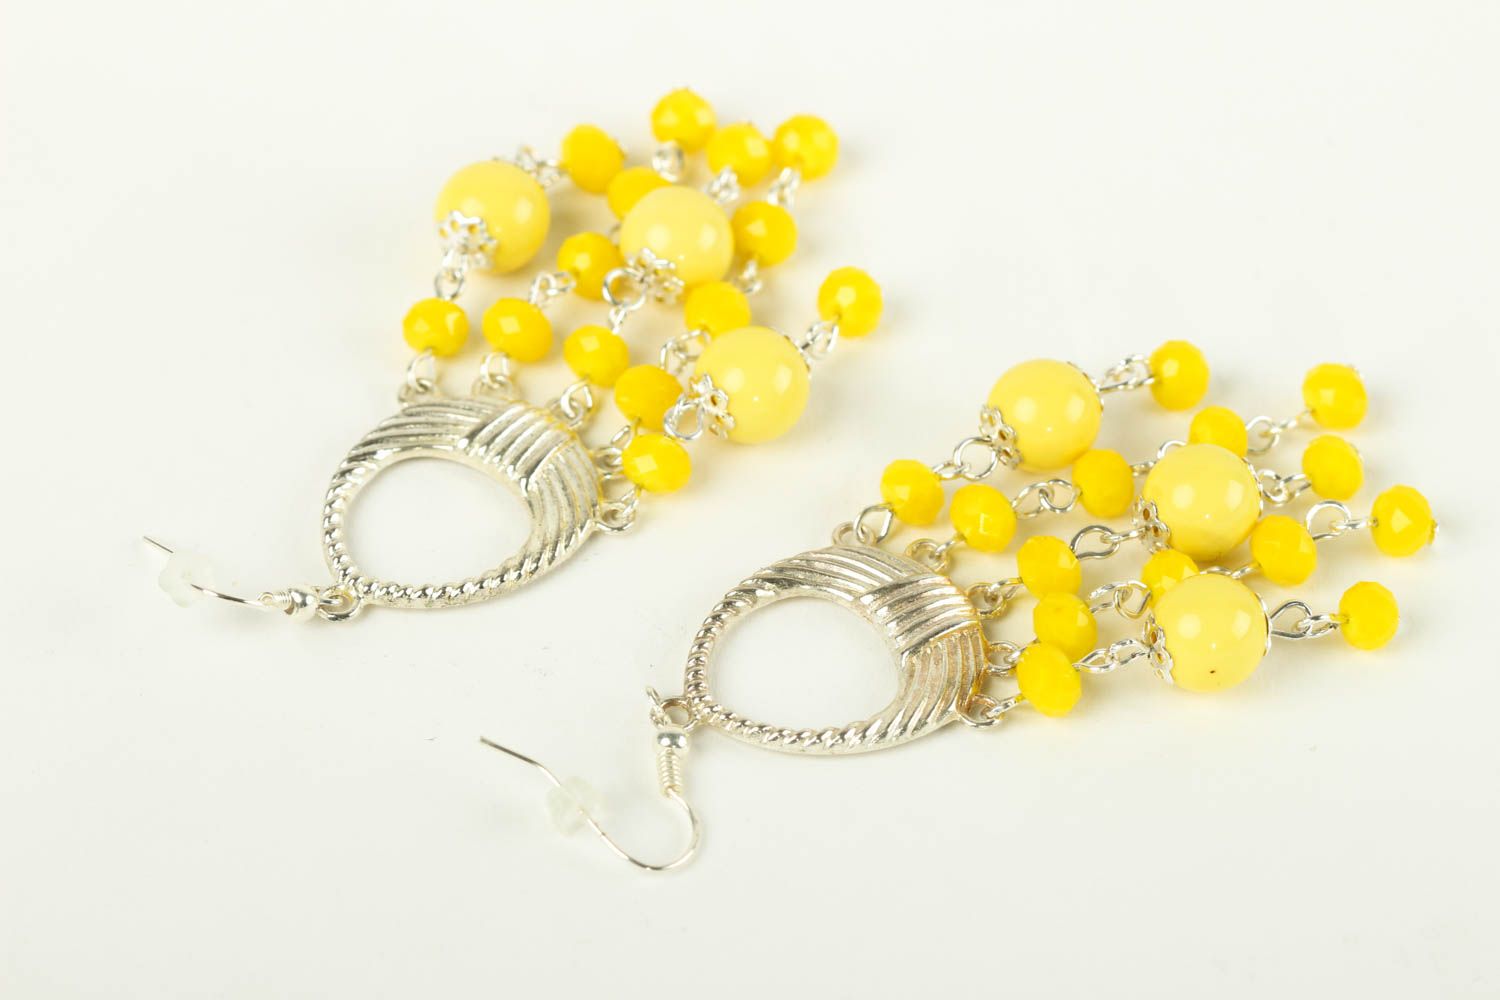 Beaded earrings designer earrings with beads handmade jewelry stylish accessory photo 4